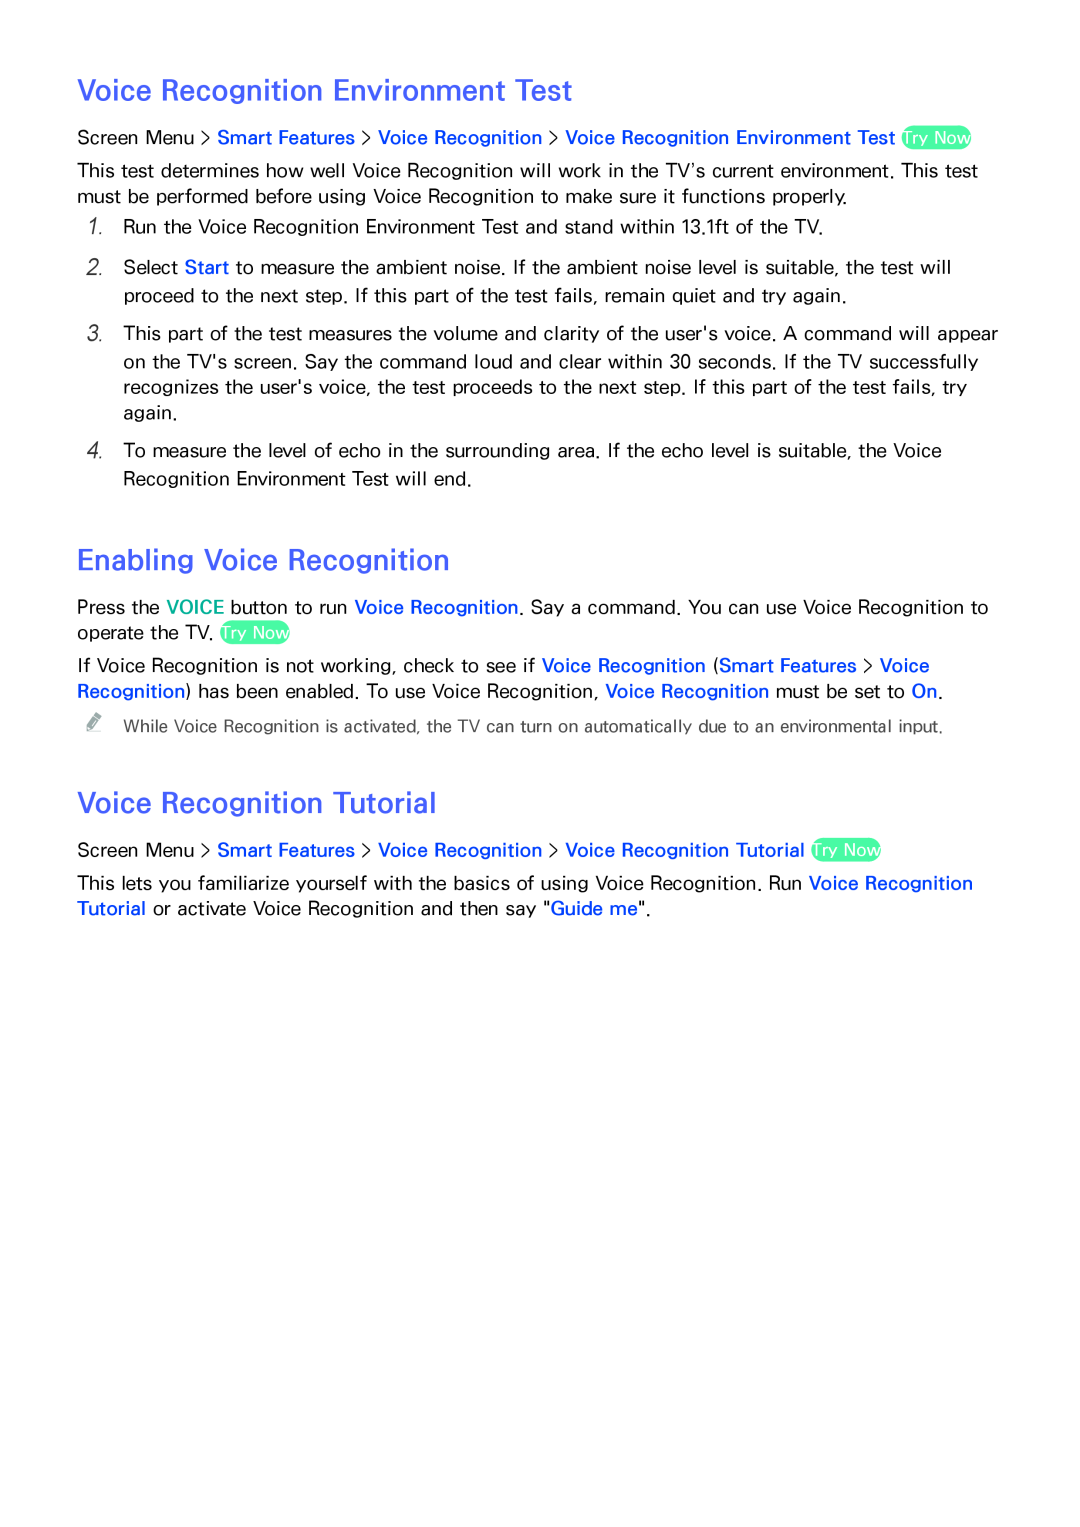 Samsung SEK-1000 manual Voice Recognition Environment Test, Enabling Voice Recognition, Voice Recognition Tutorial 